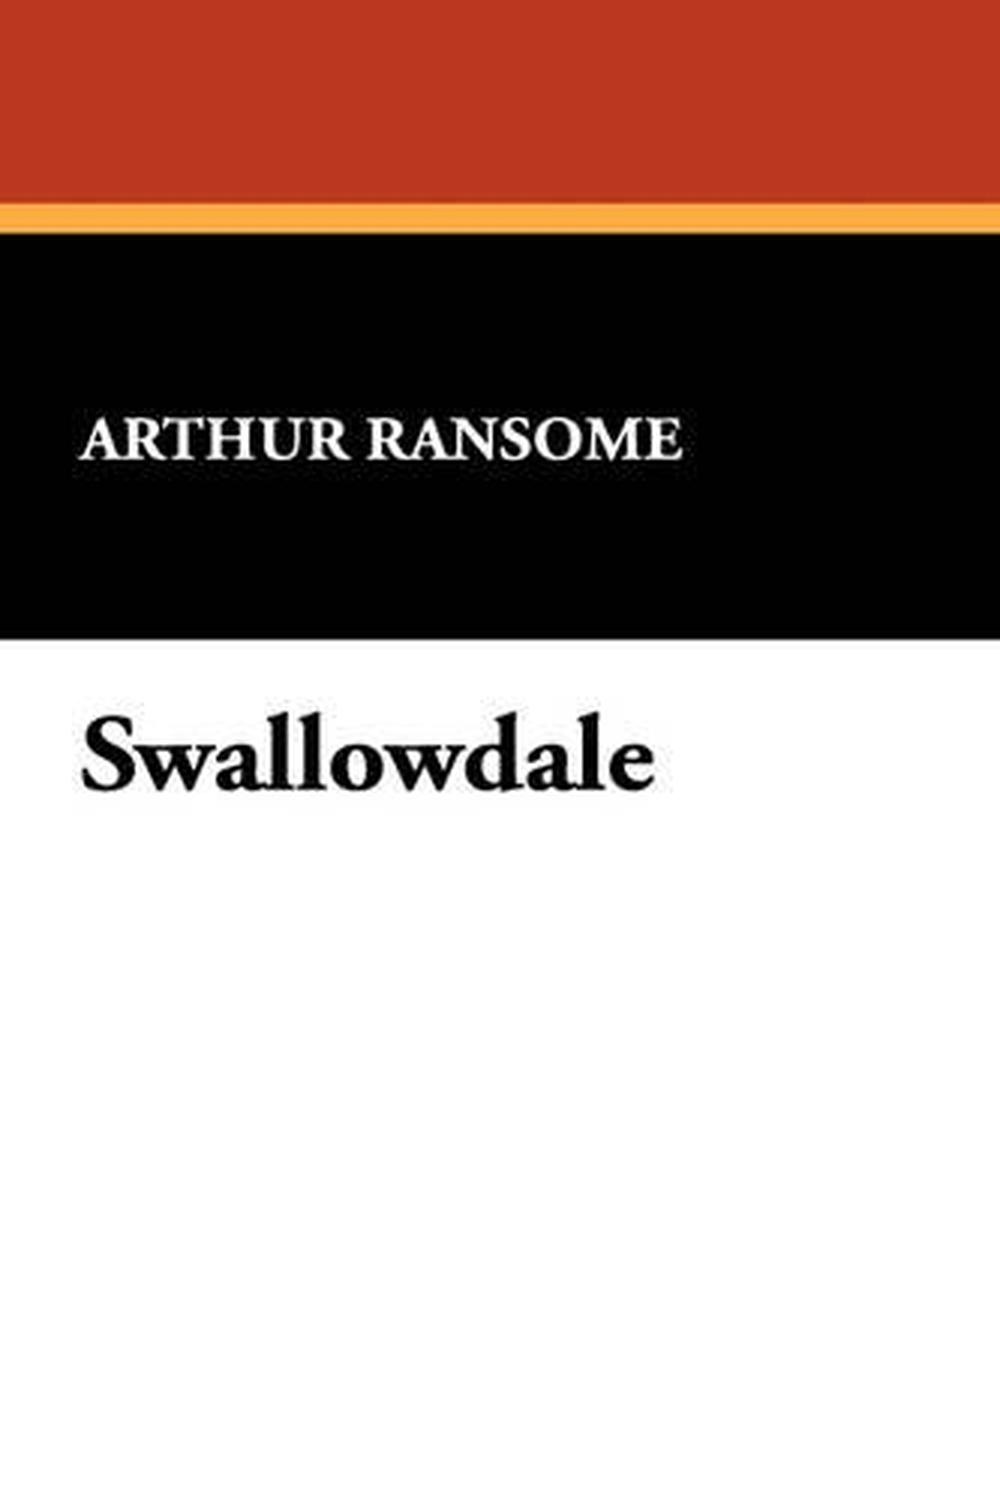 swallowdale arthur ransome